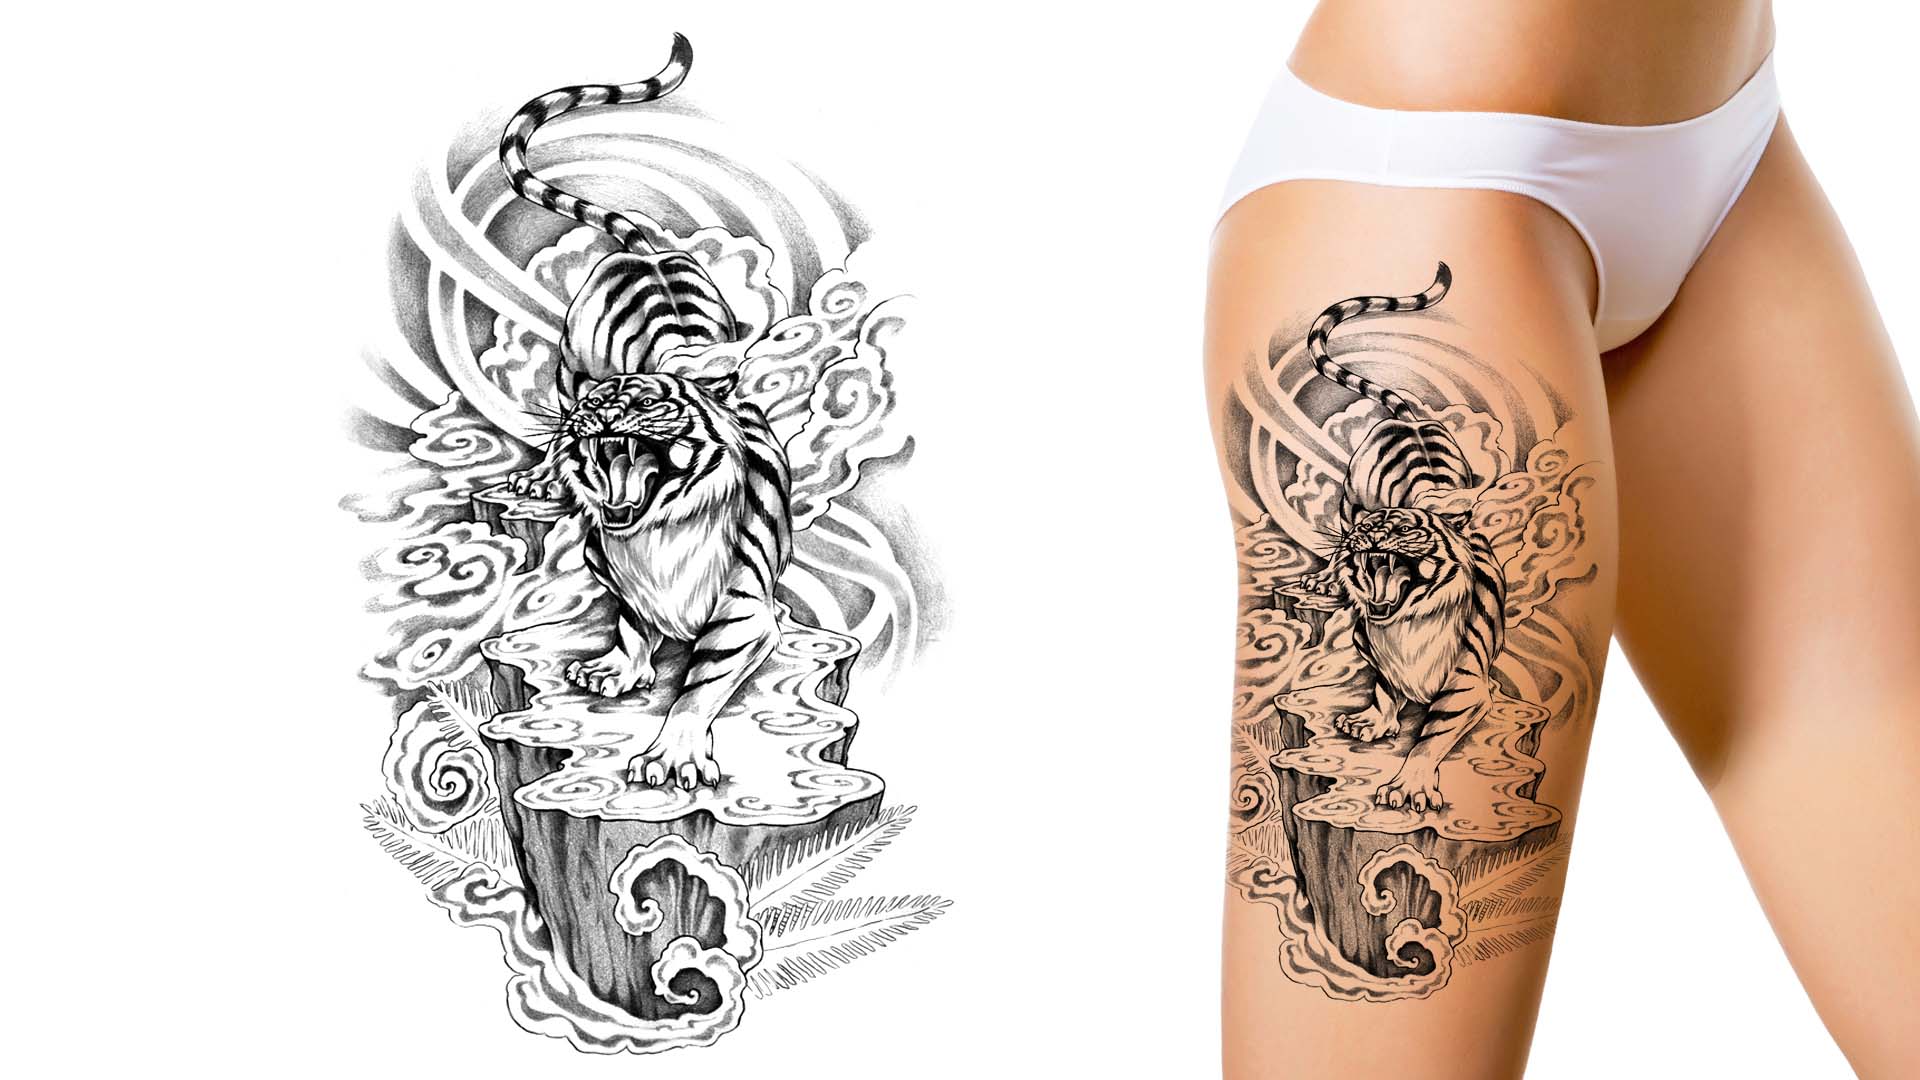 Custom Tattoo Creator - Design Your Own Tattoo - wide 4